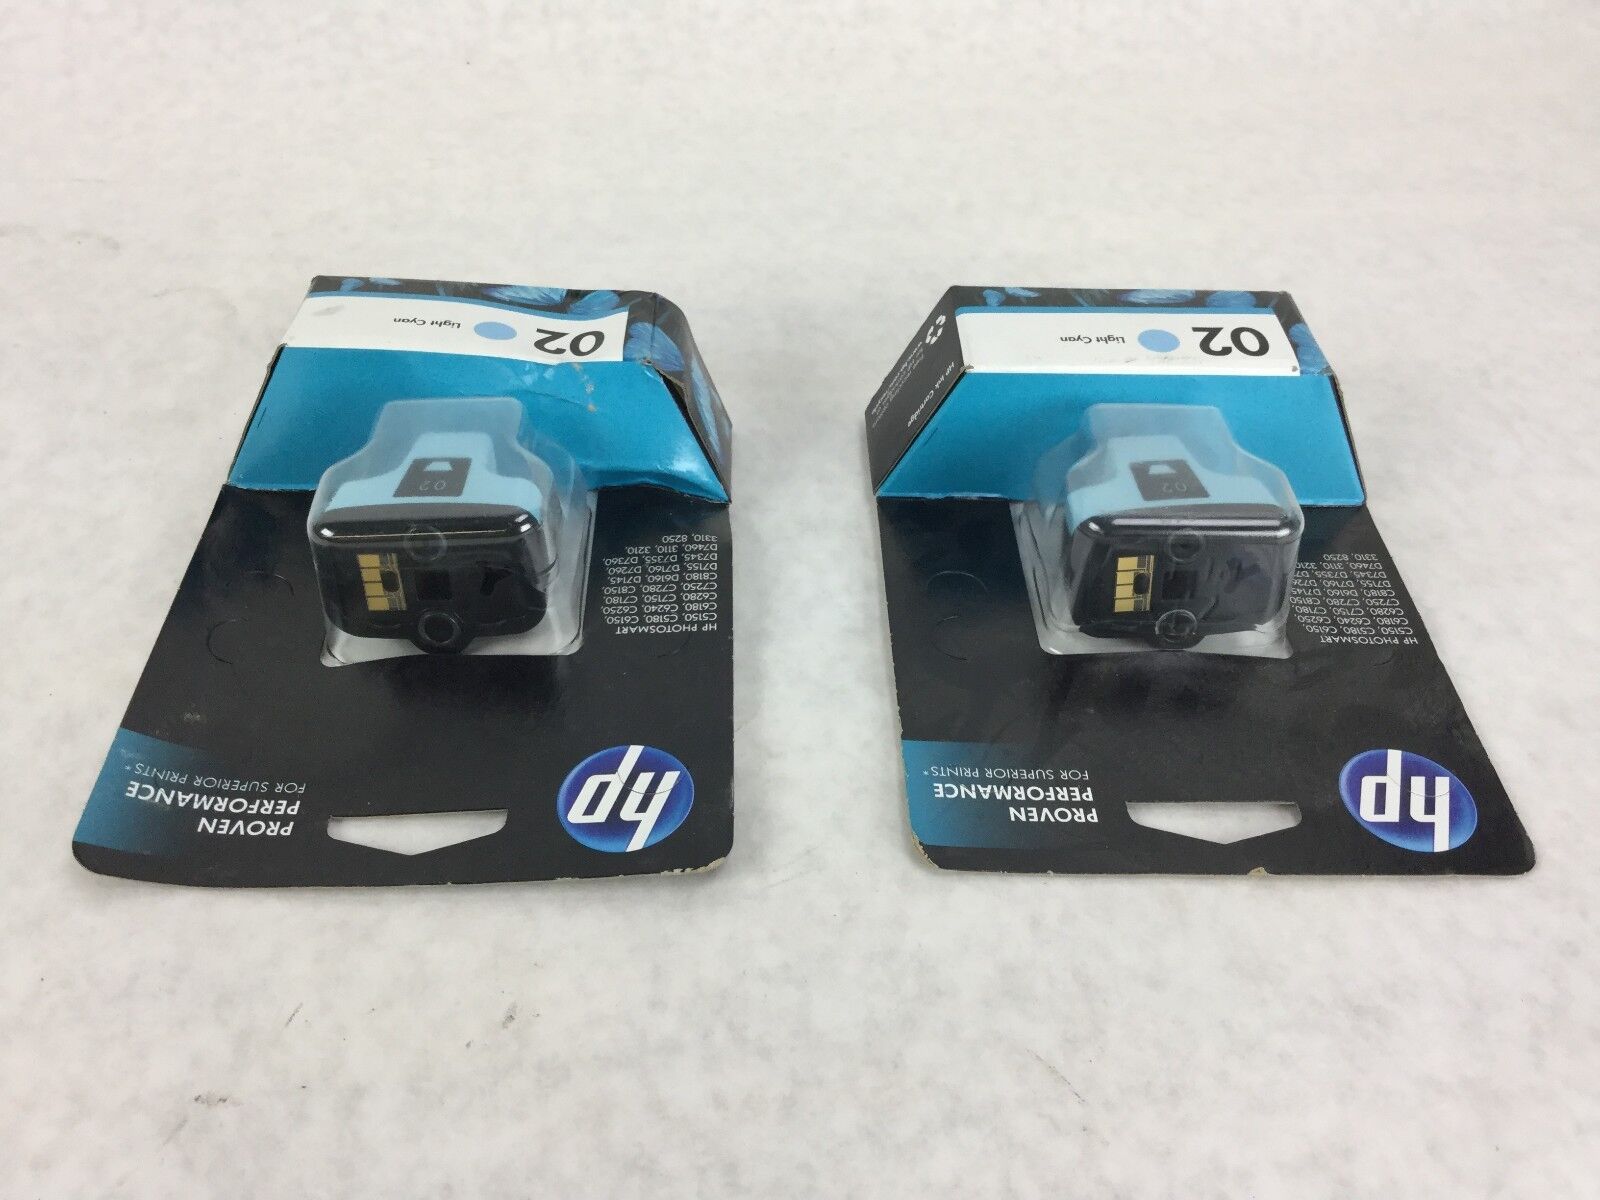 Genuine HP 02 Light Cyan Cartridge C8774WN, Lot of 2, NEW Sealed